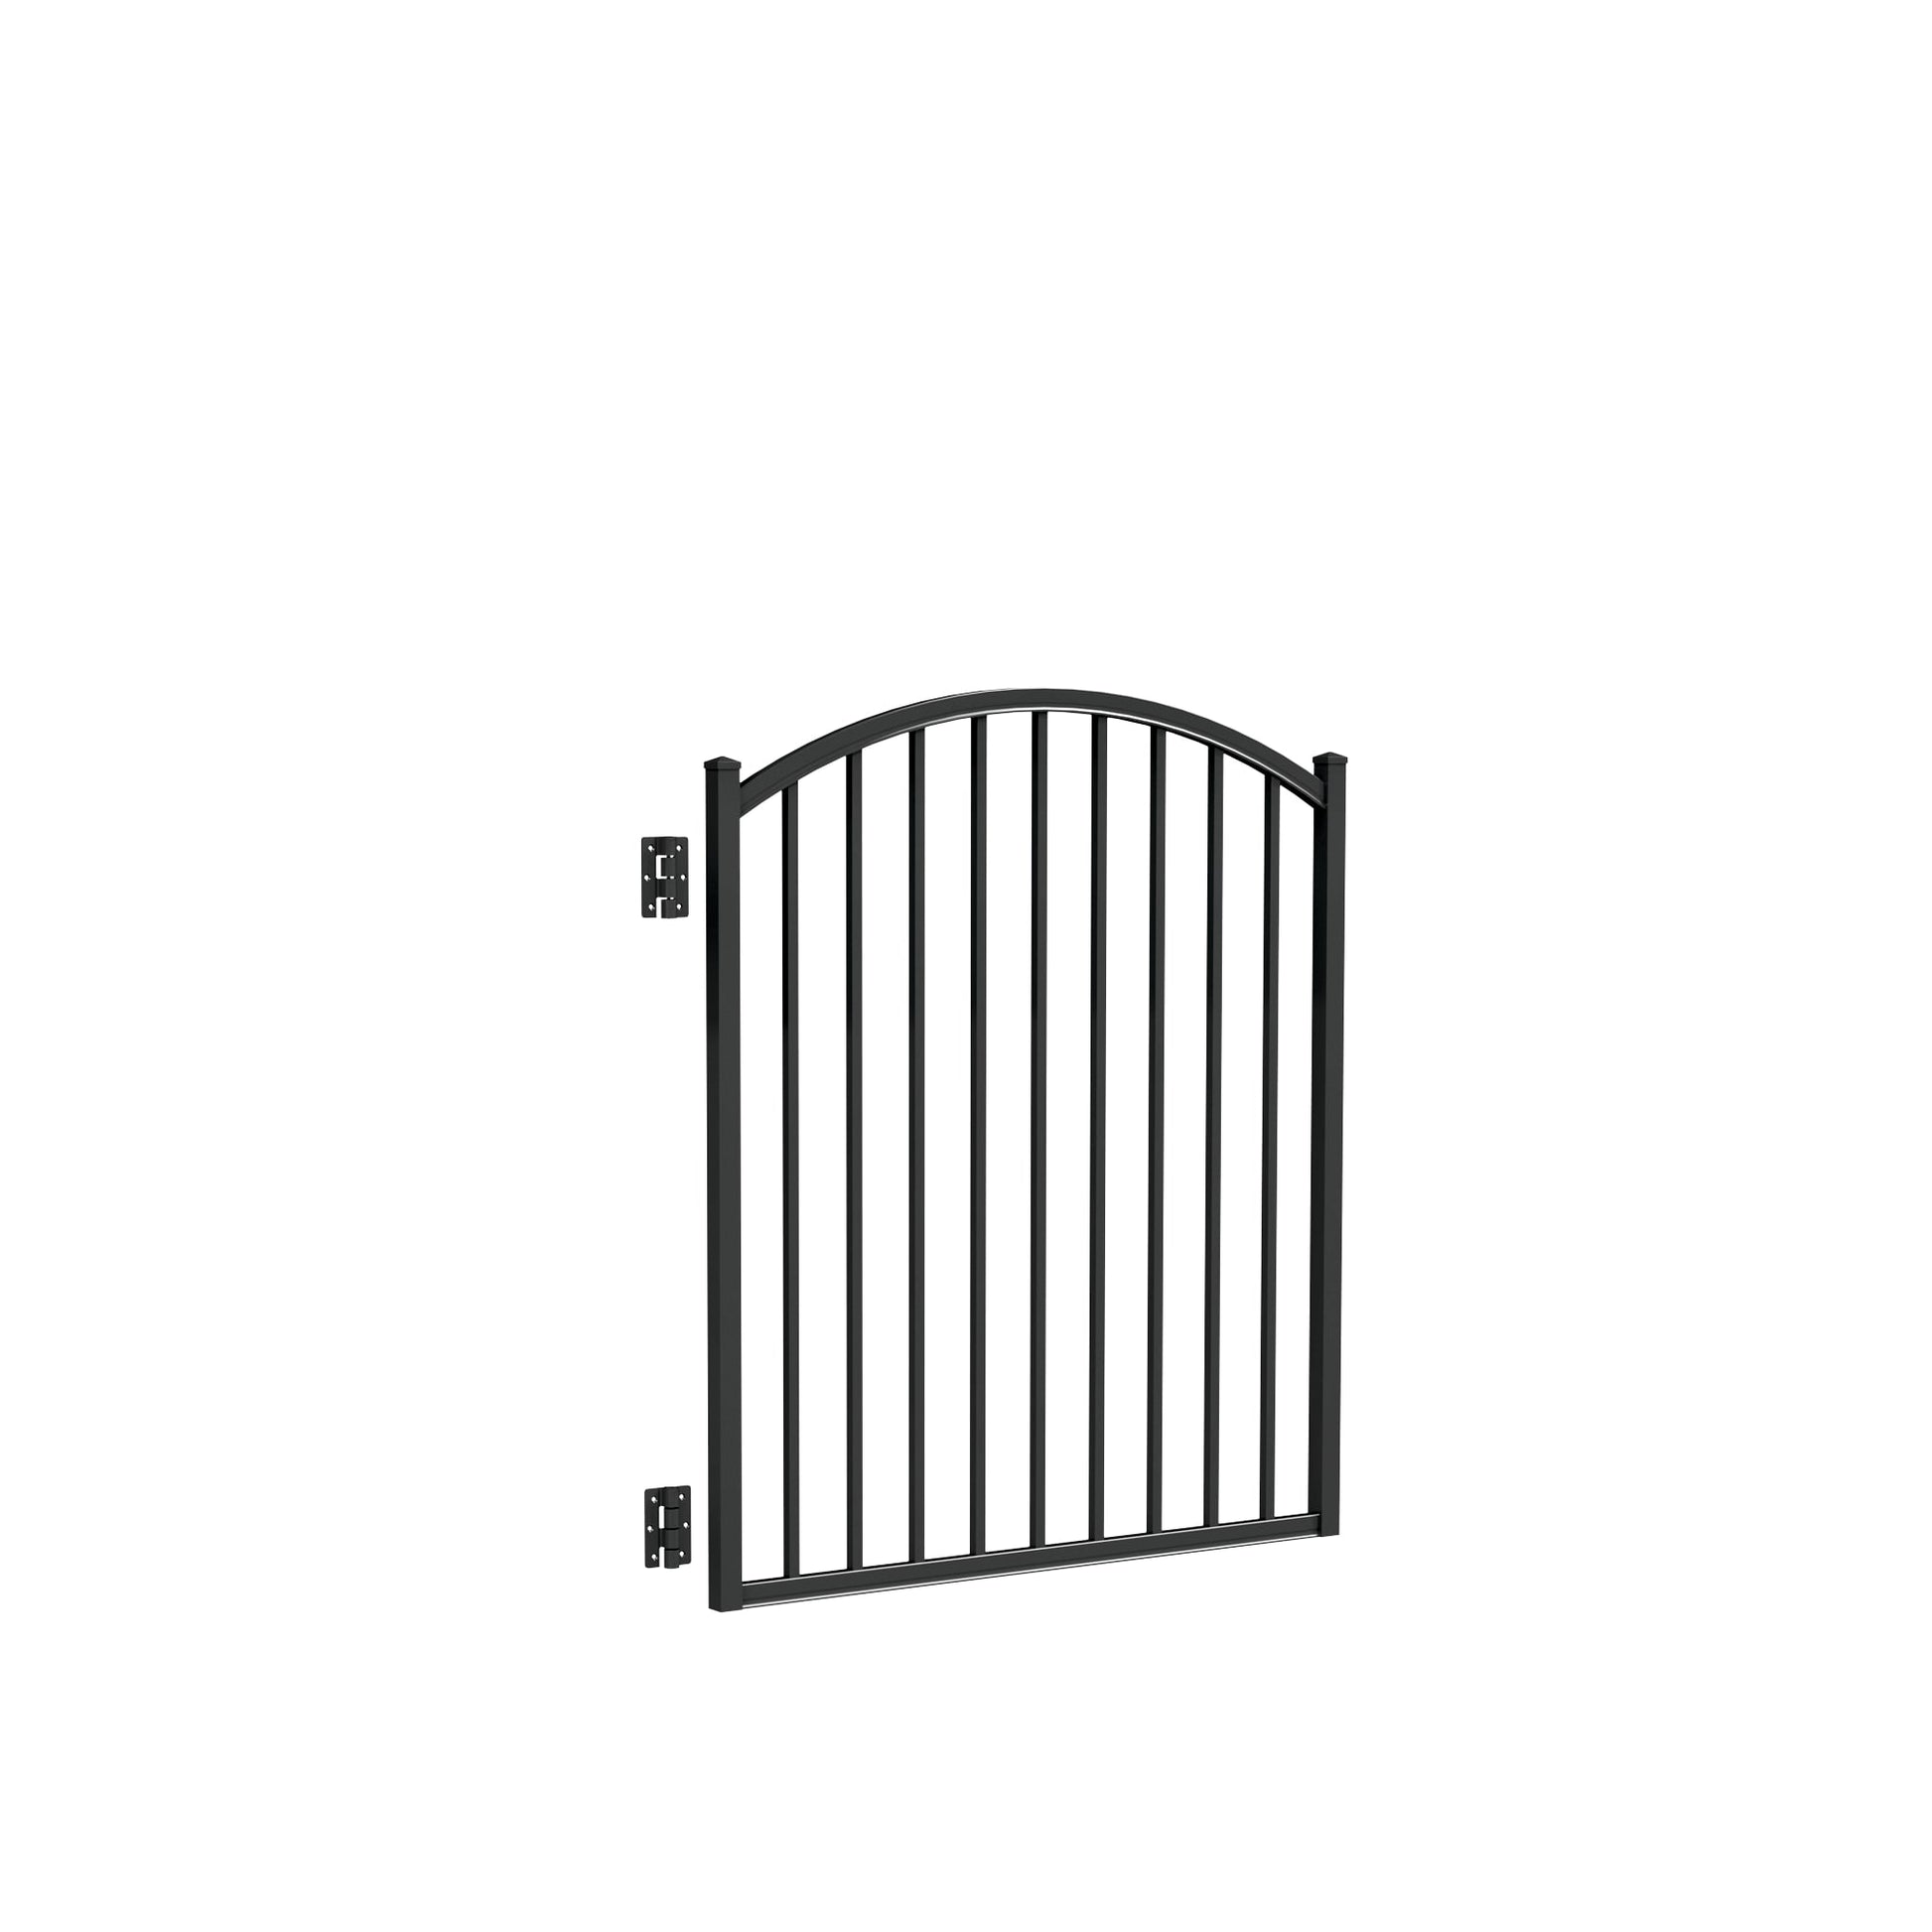 Bedrock Haven Series - Arched Gate - 4' x 4'-Aluminum Fence Gates-ActiveYards-Black-FenceCenter